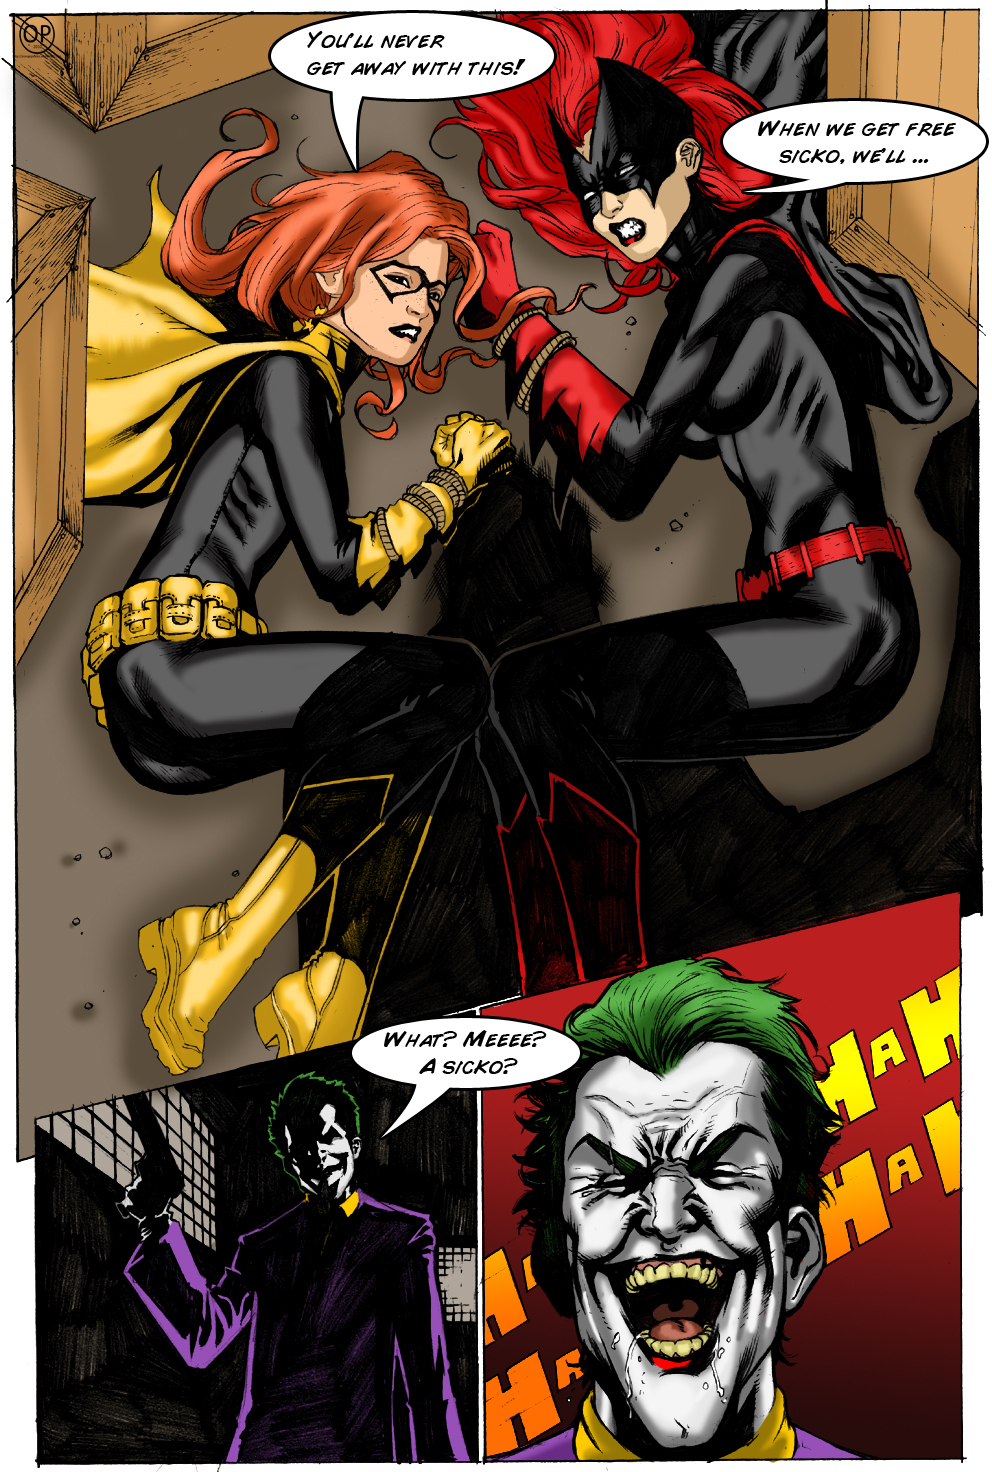 Joker vs Batwoman00